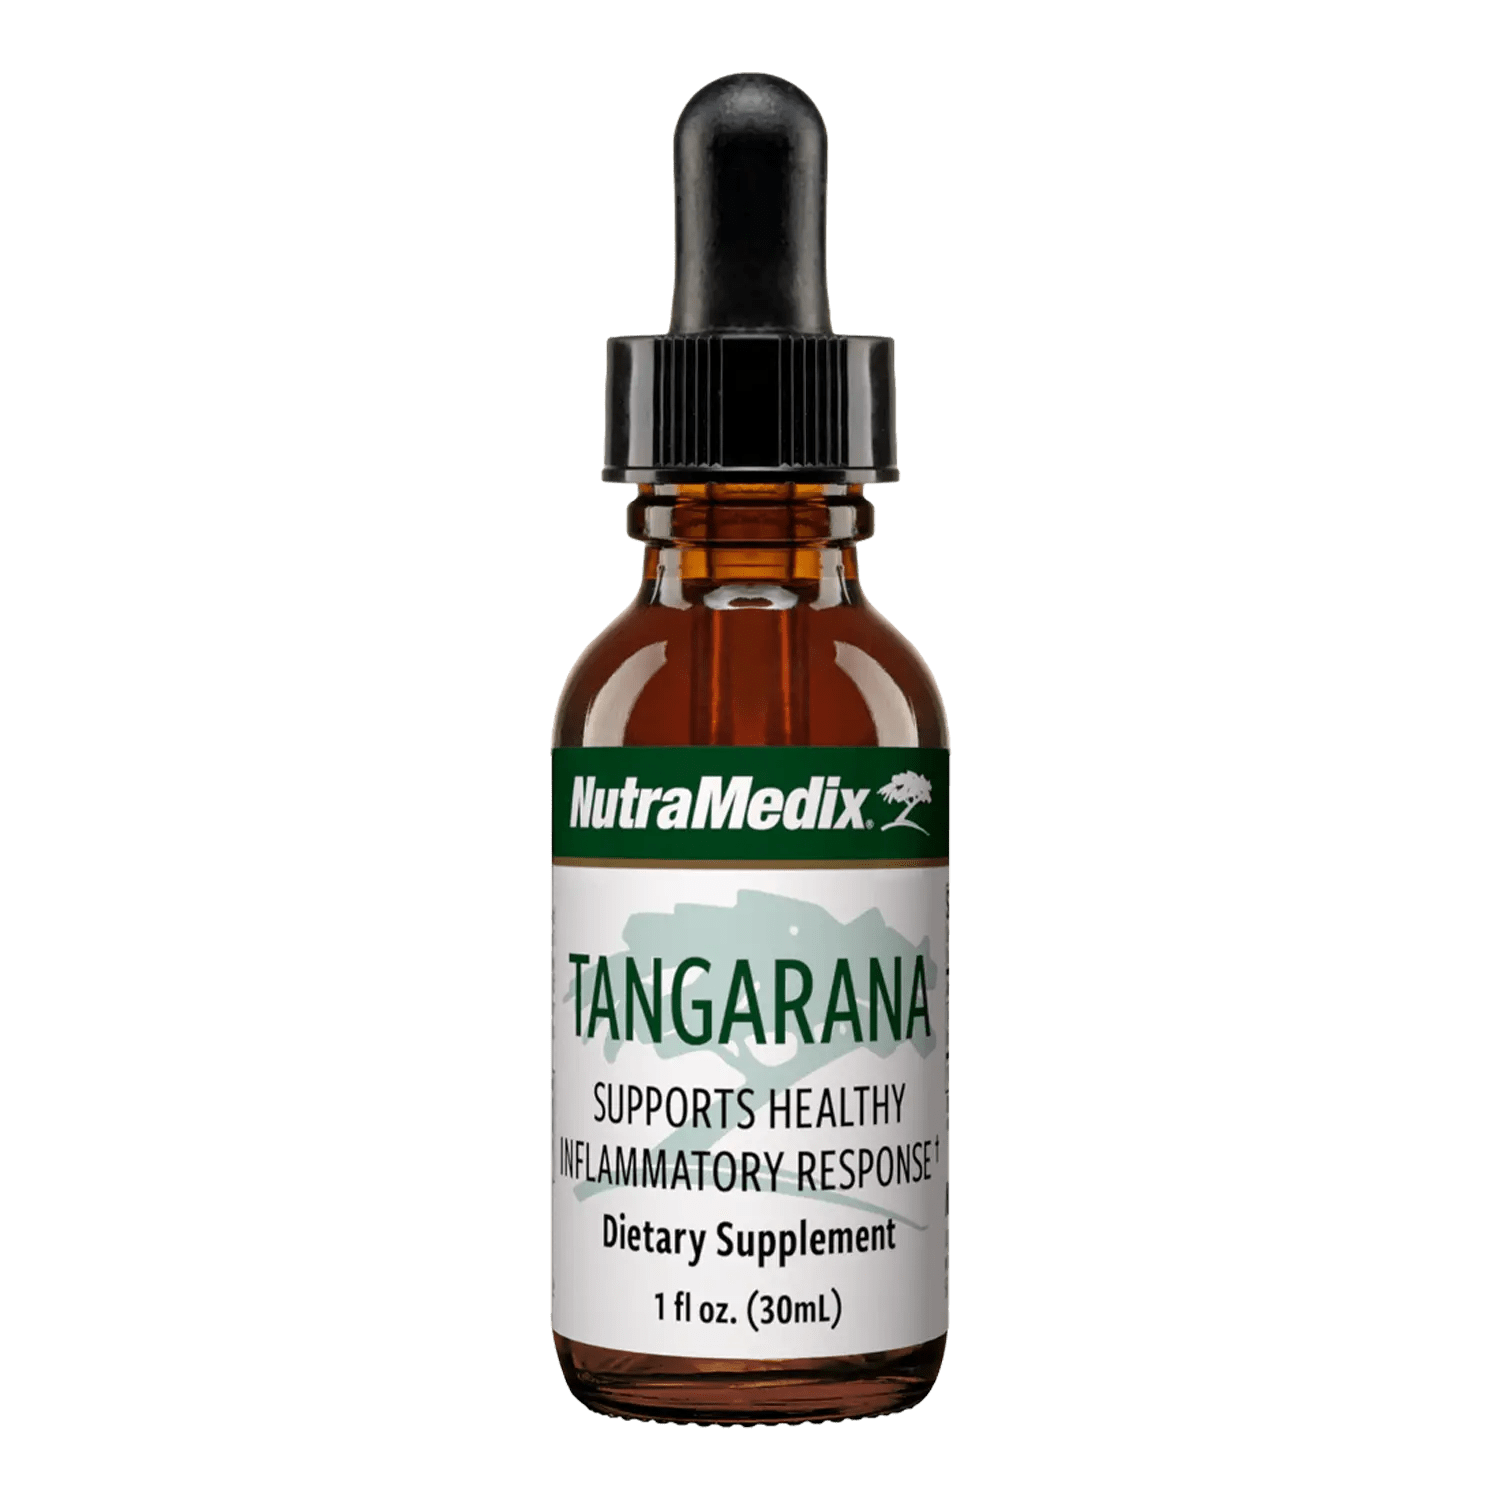 Tangarana liquid supplement - 1oz inflammatory response support supplement